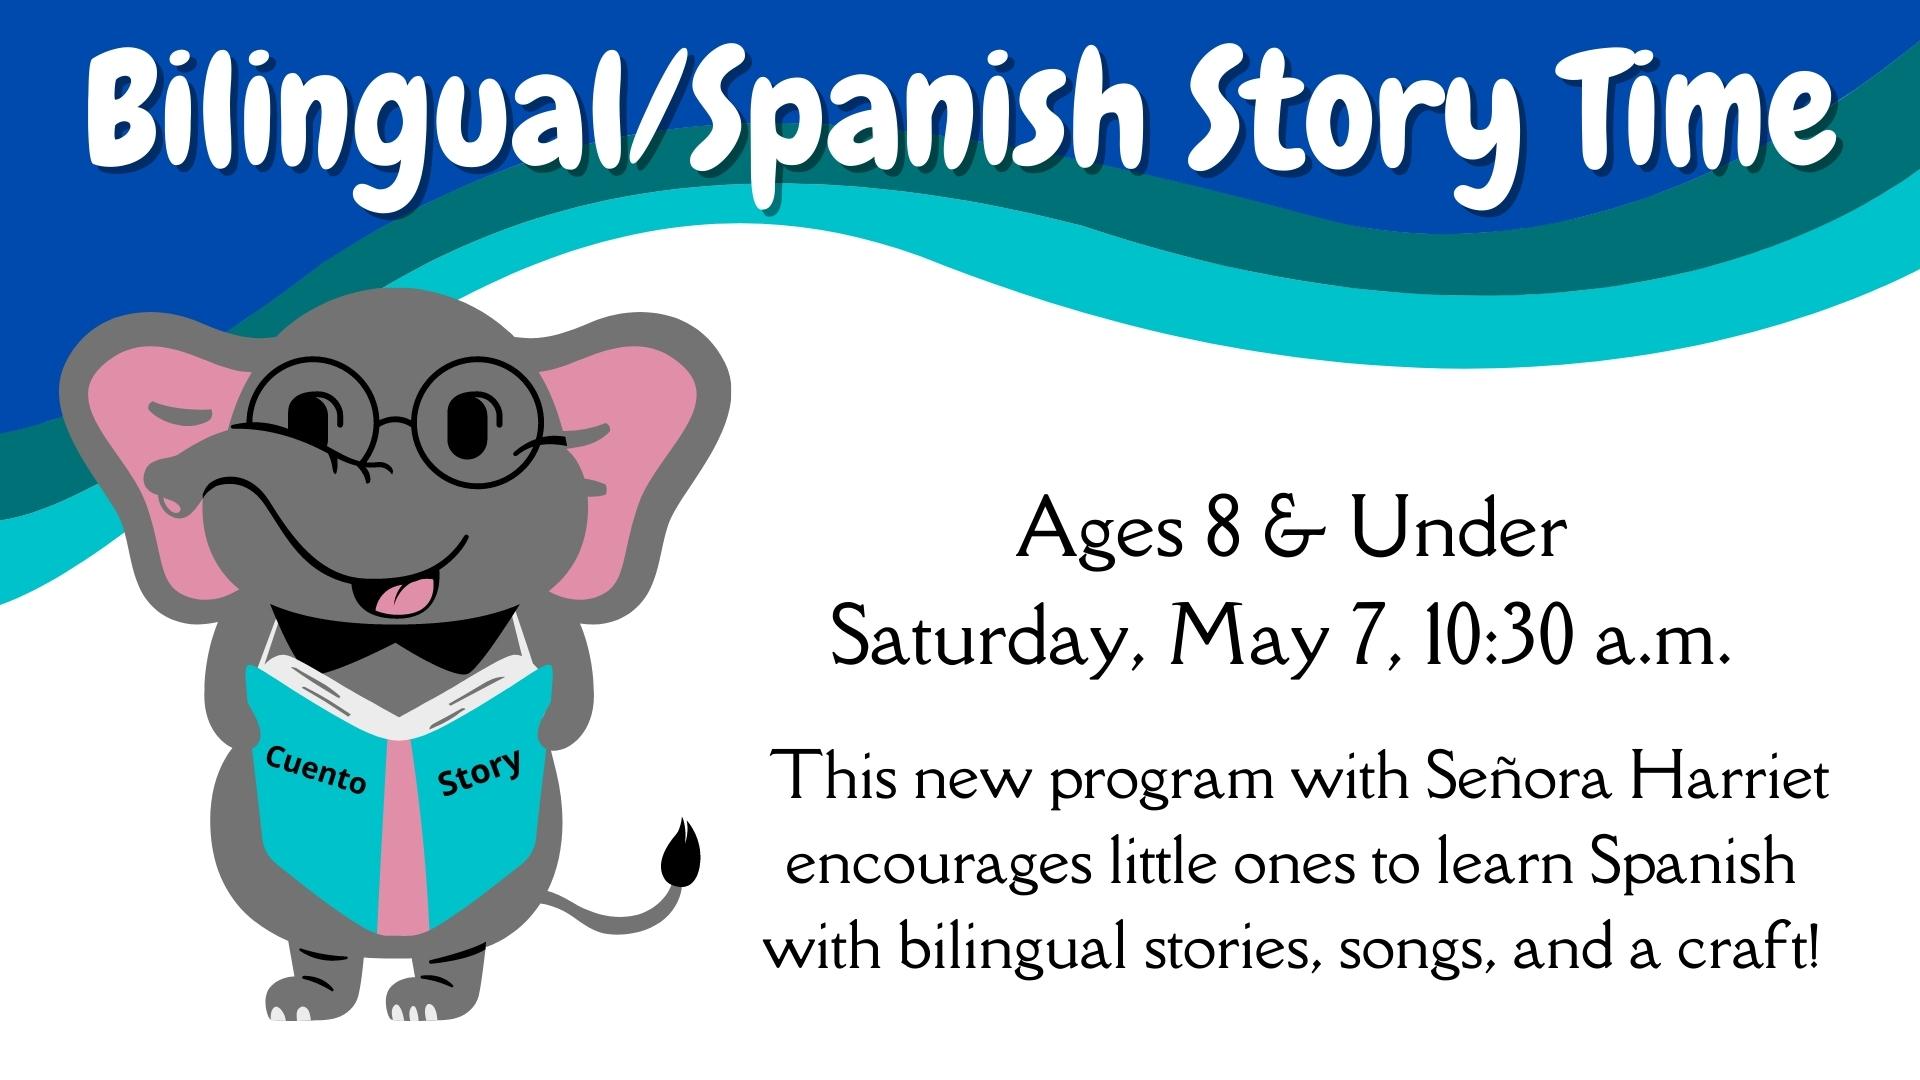 Bilingual/Spanish Story Time